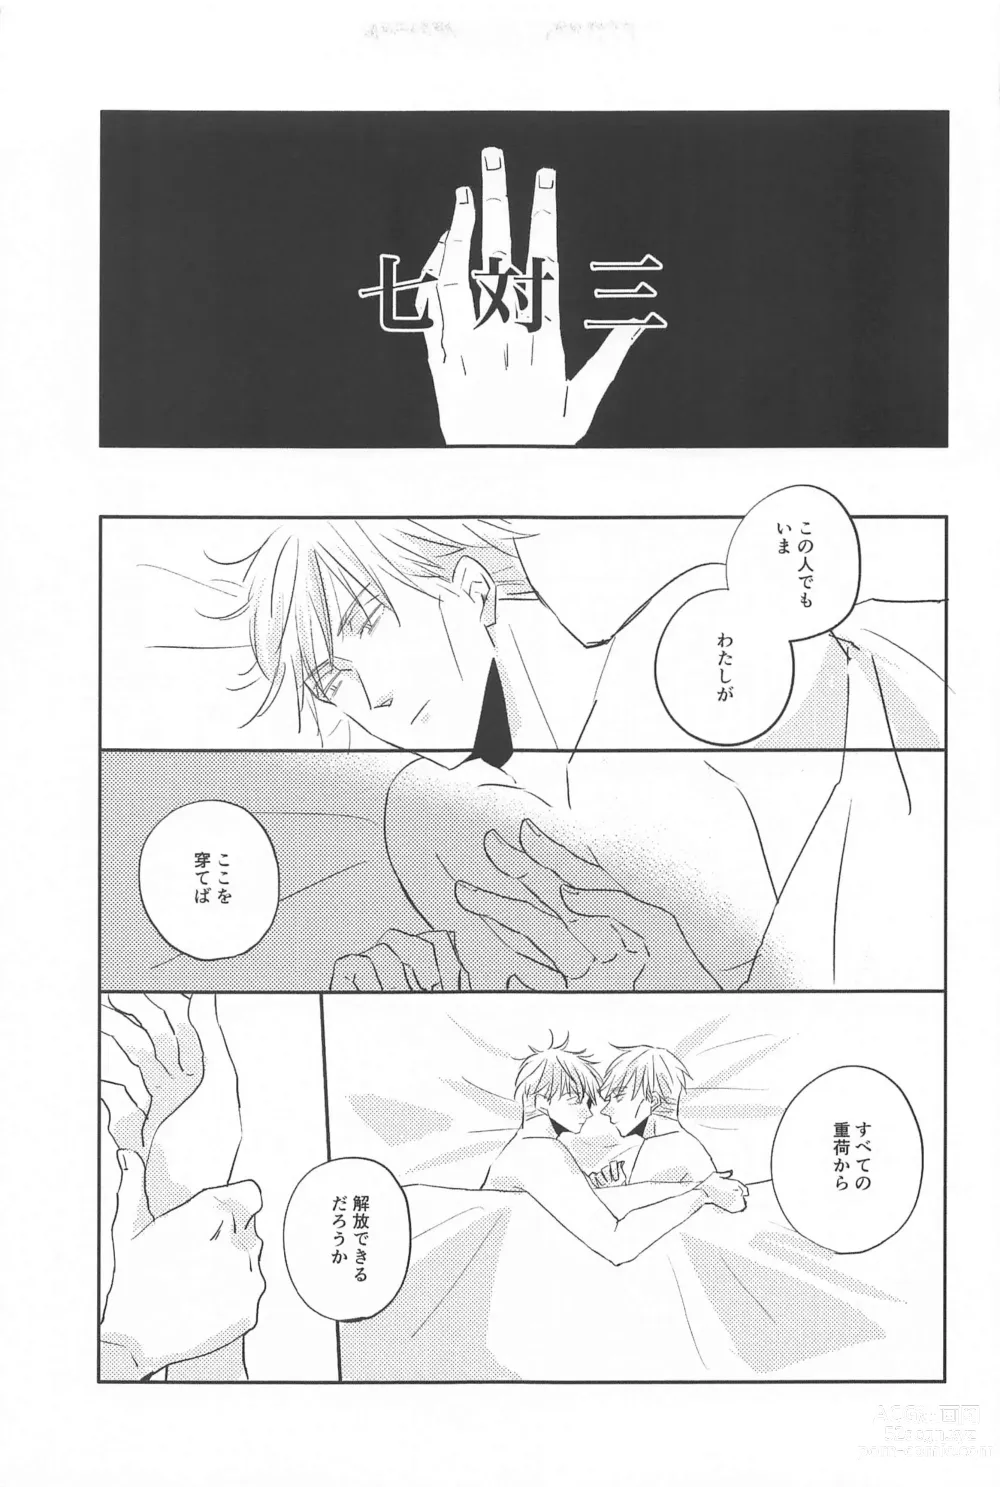 Page 42 of doujinshi timeless memory 2